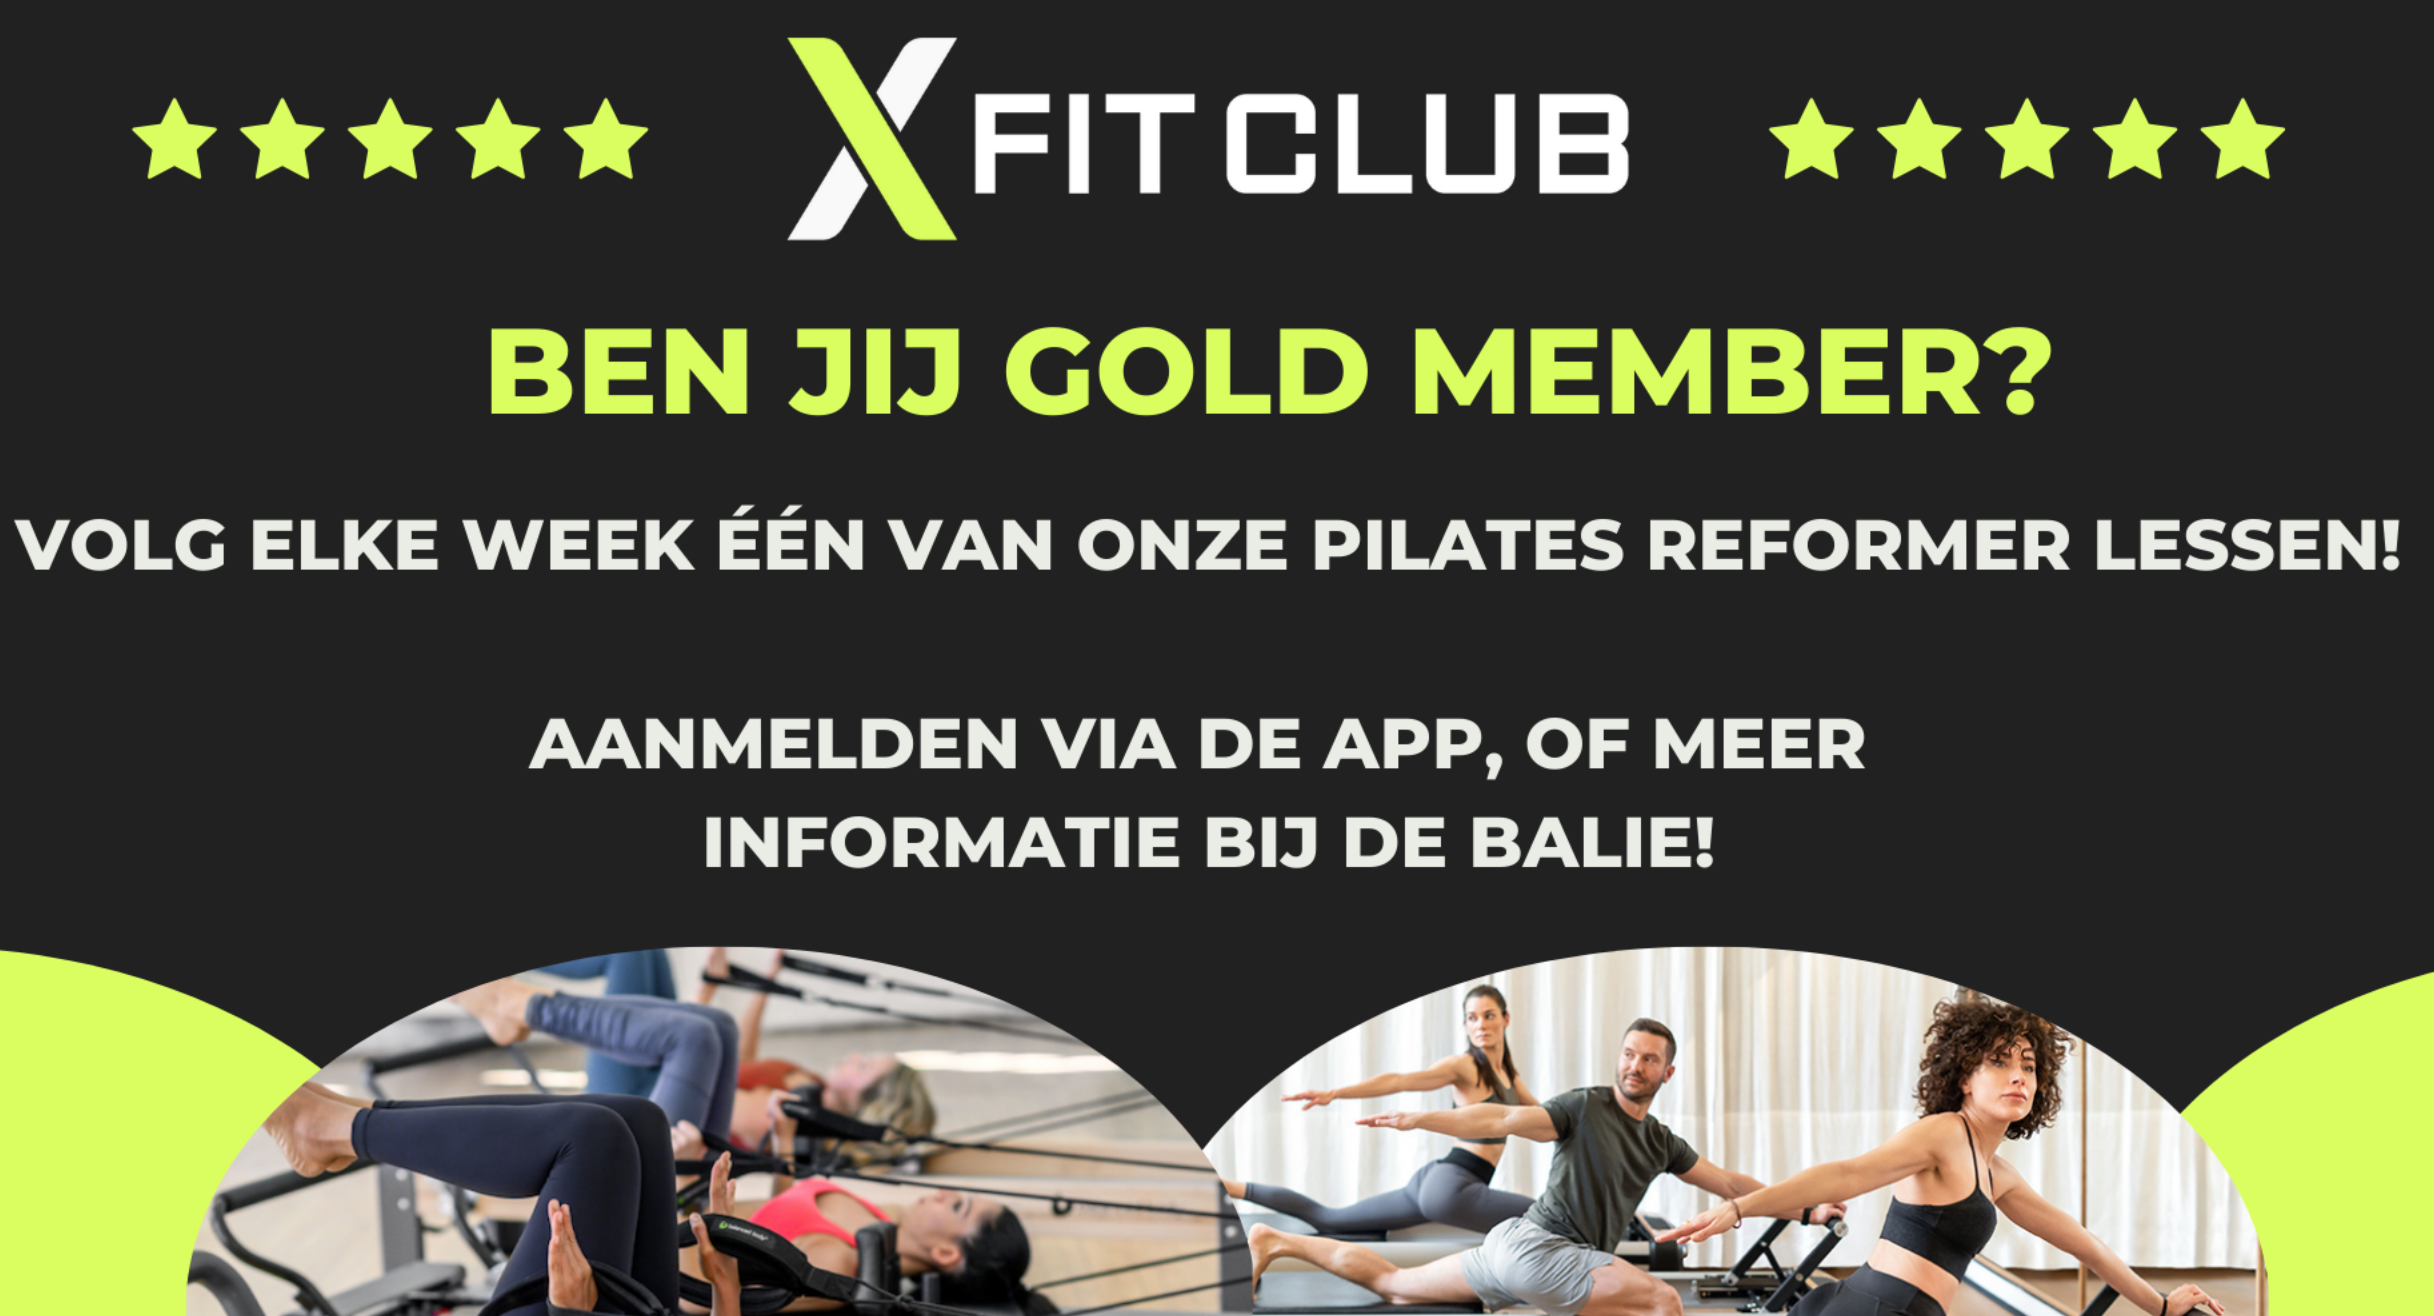 x fit club digital signage for gyms